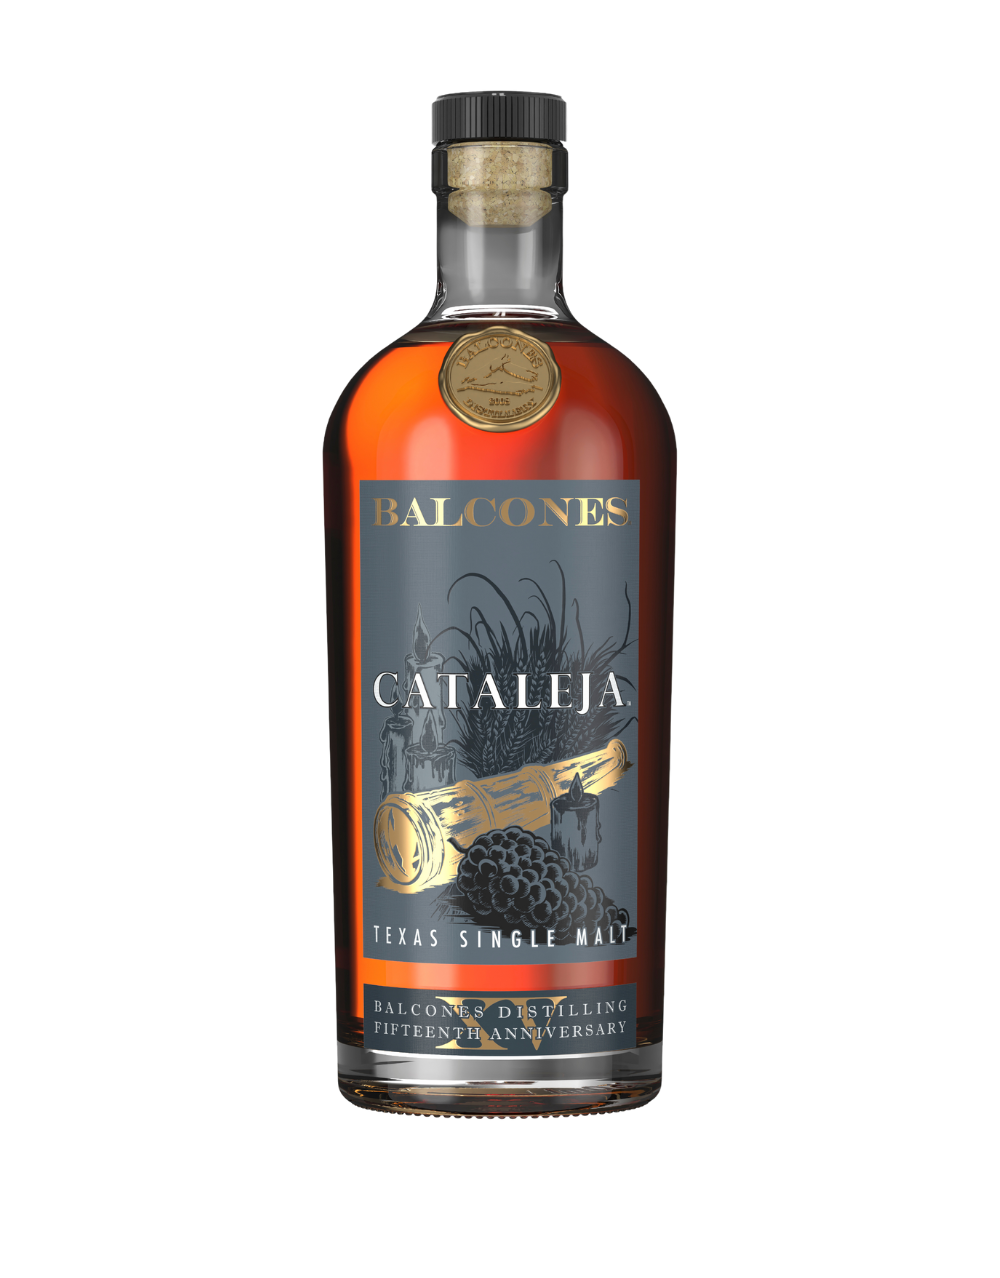 Balcones Cataleja Texas Single Malt Whisky 750ml